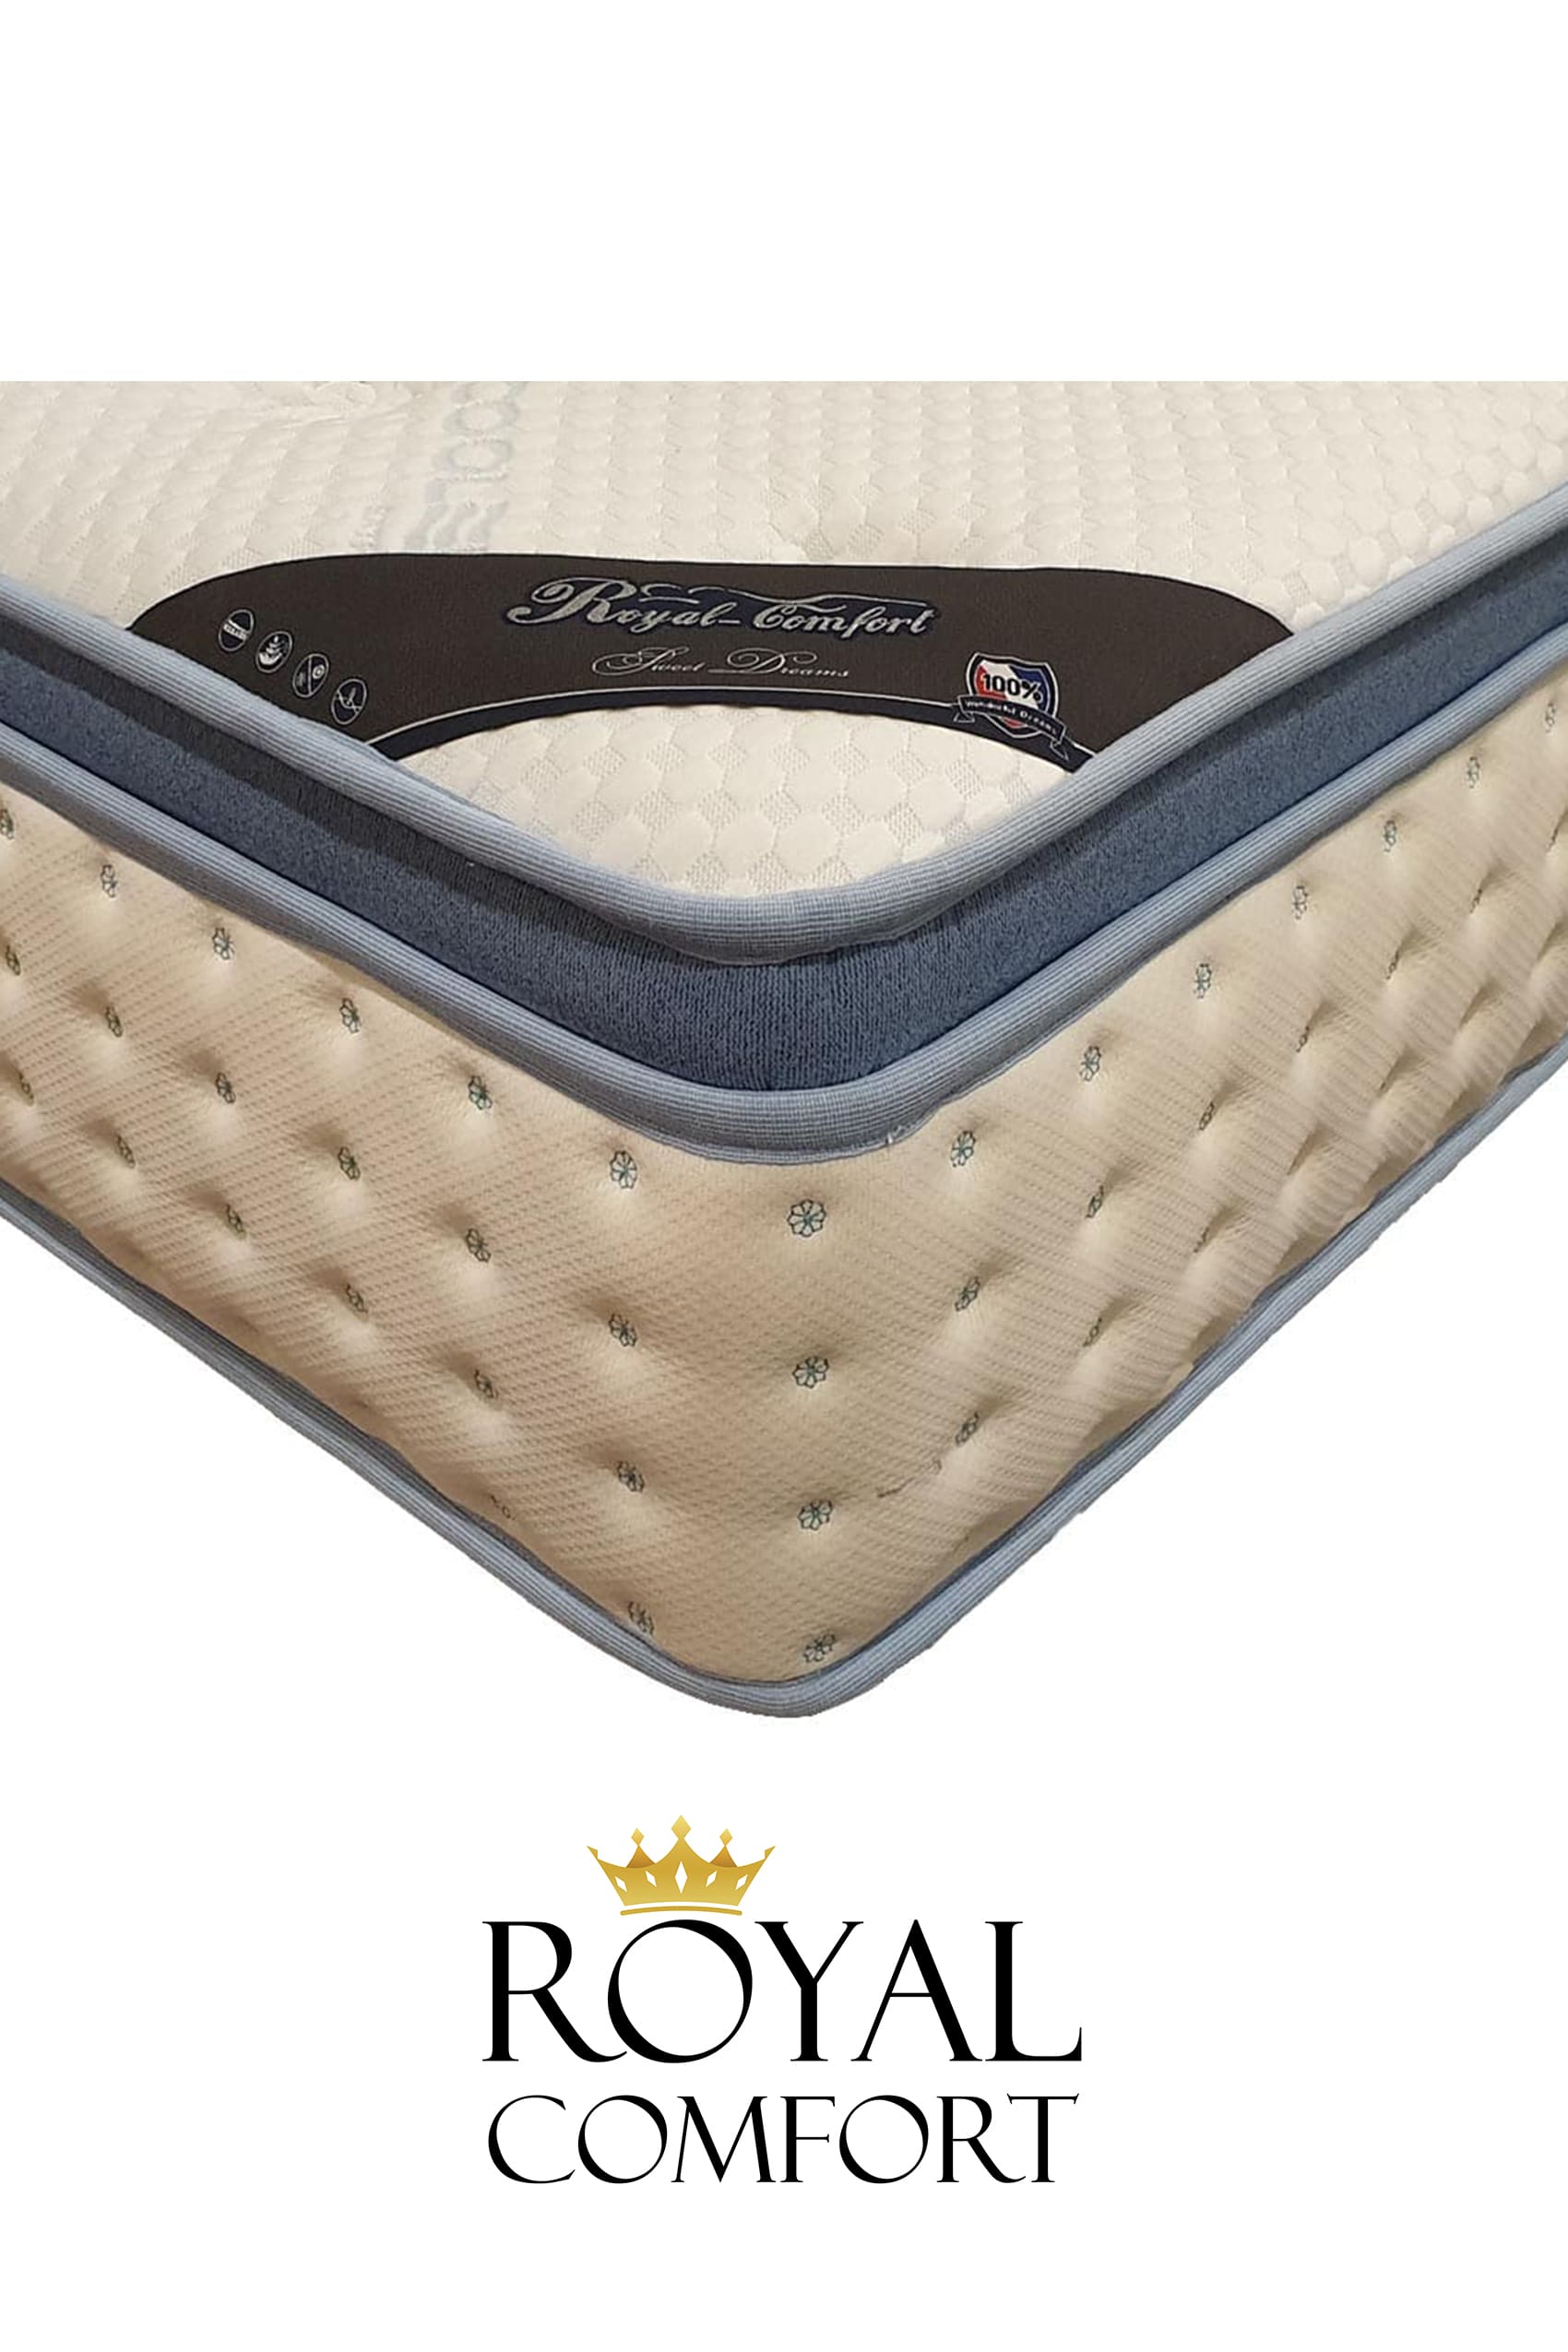 Royal Comfort Mattress